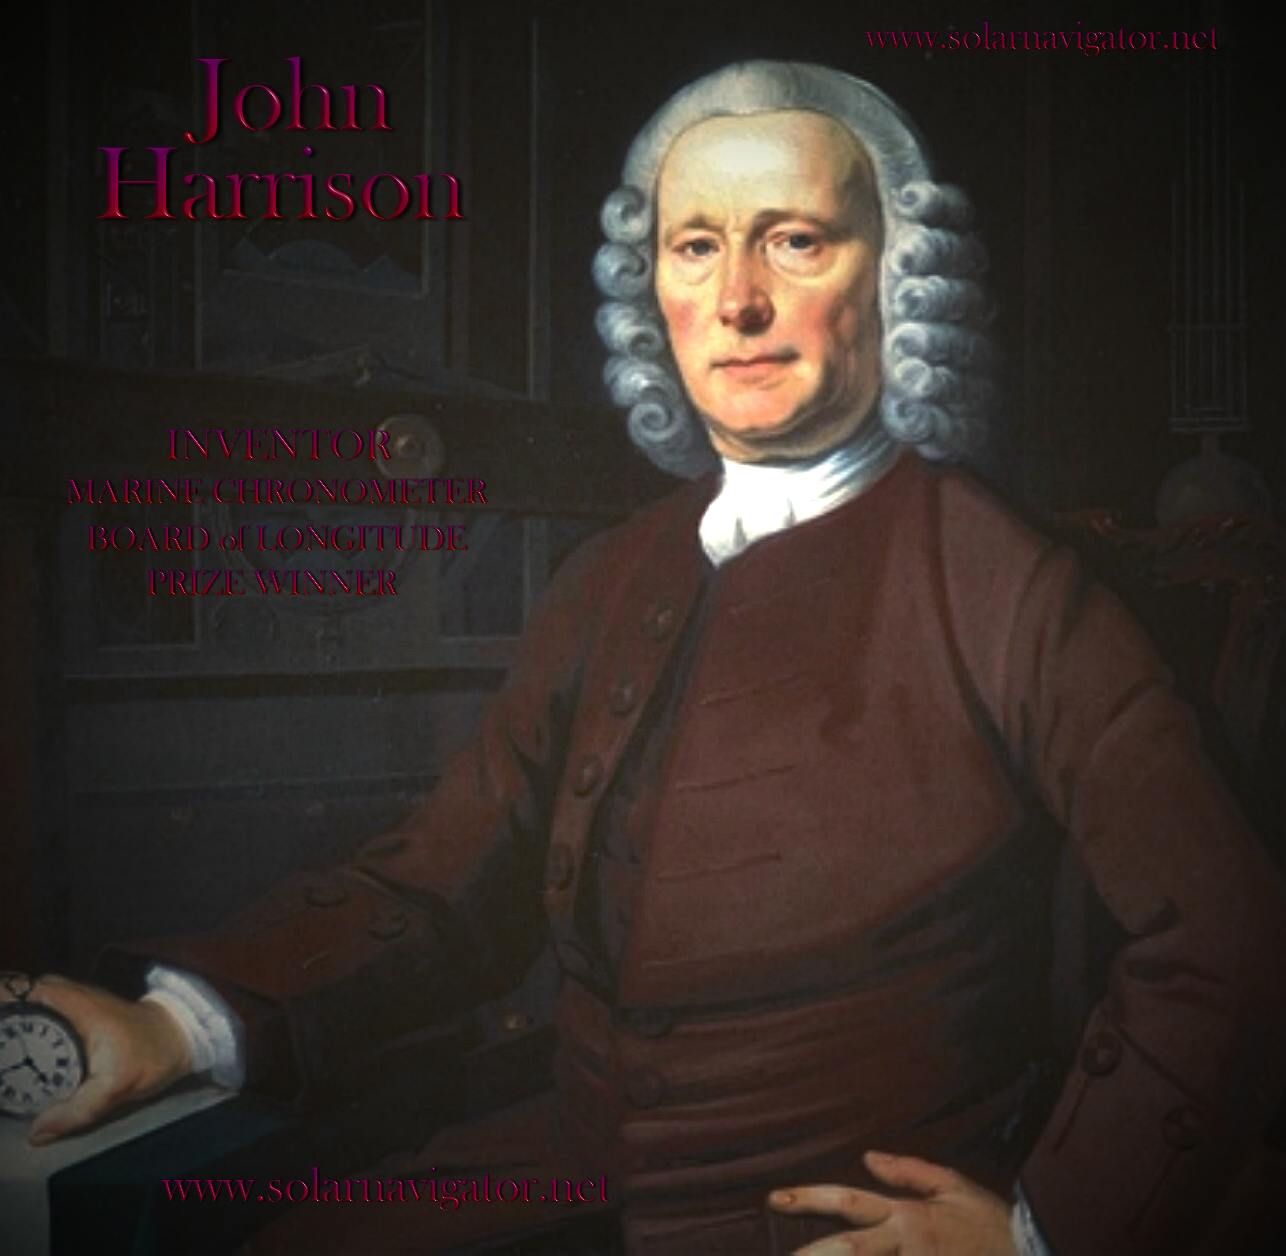 Portrait of John Harrison, inventor of the Marine Chronometer, Board of Longitude